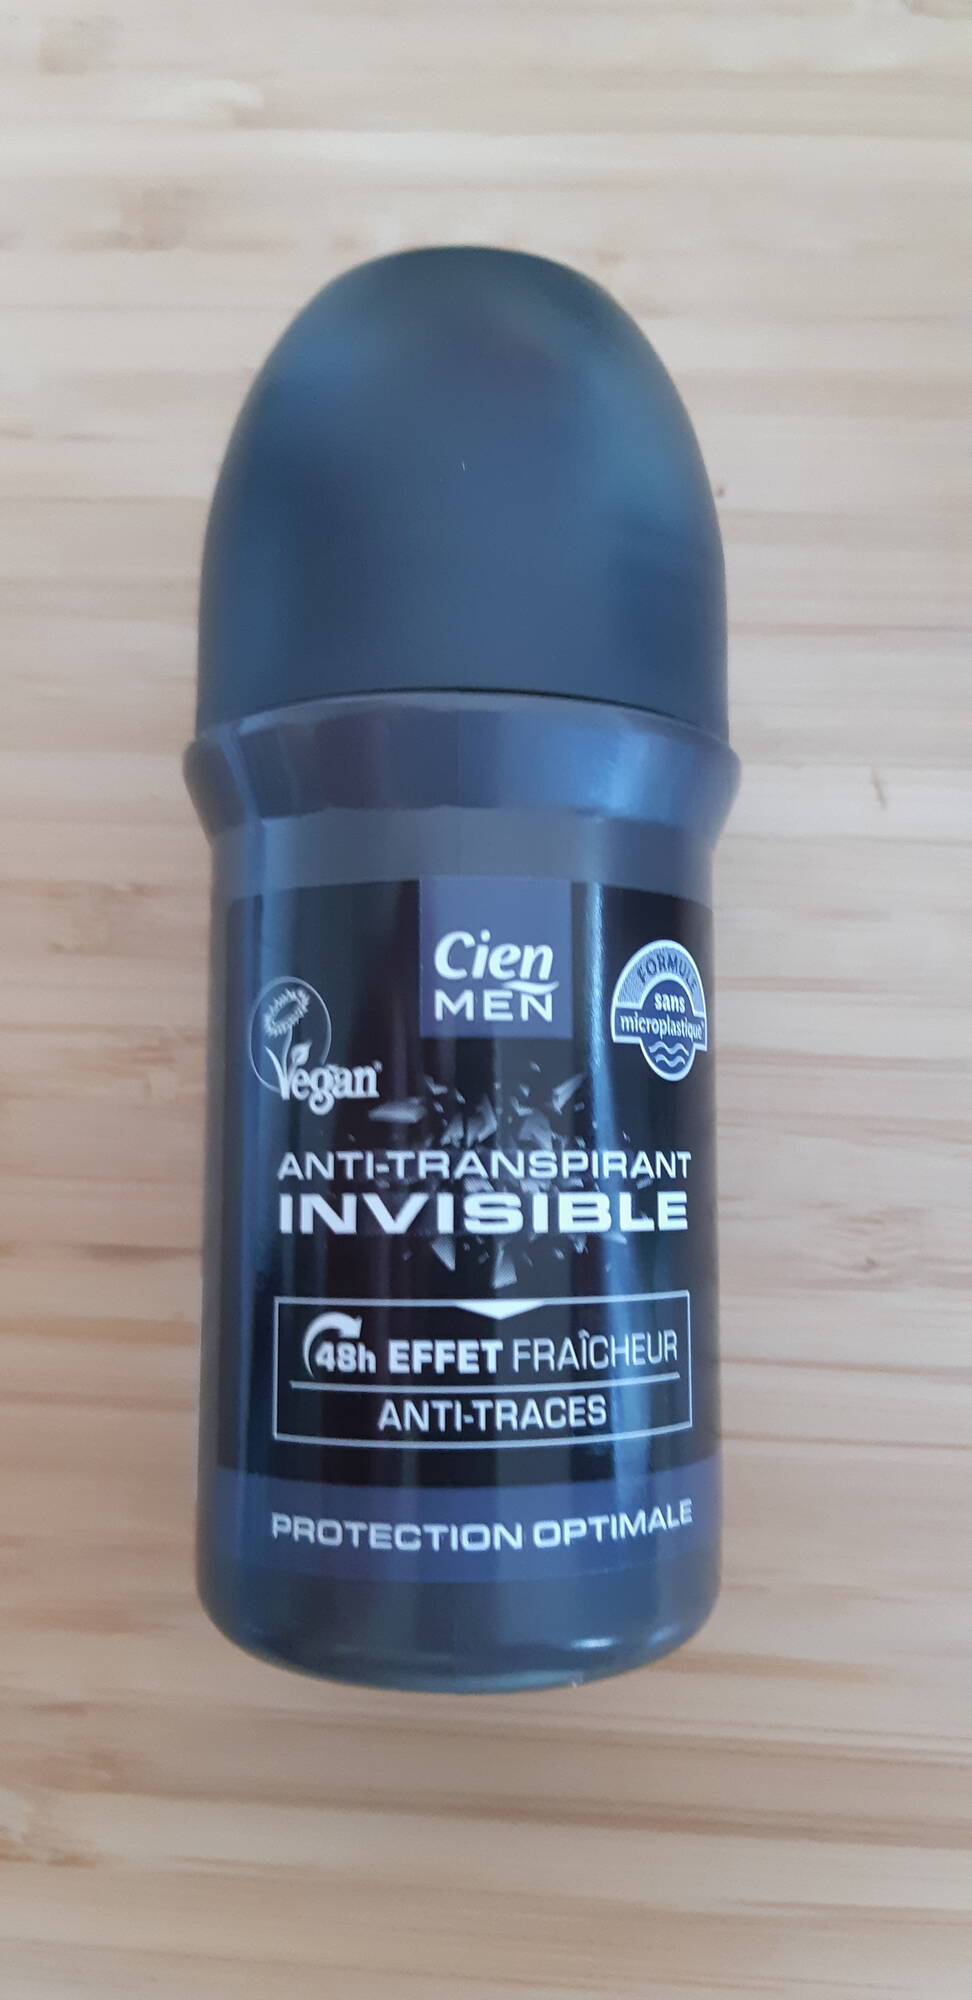 CIEN - Men - Anti-transpirant invisible 48h